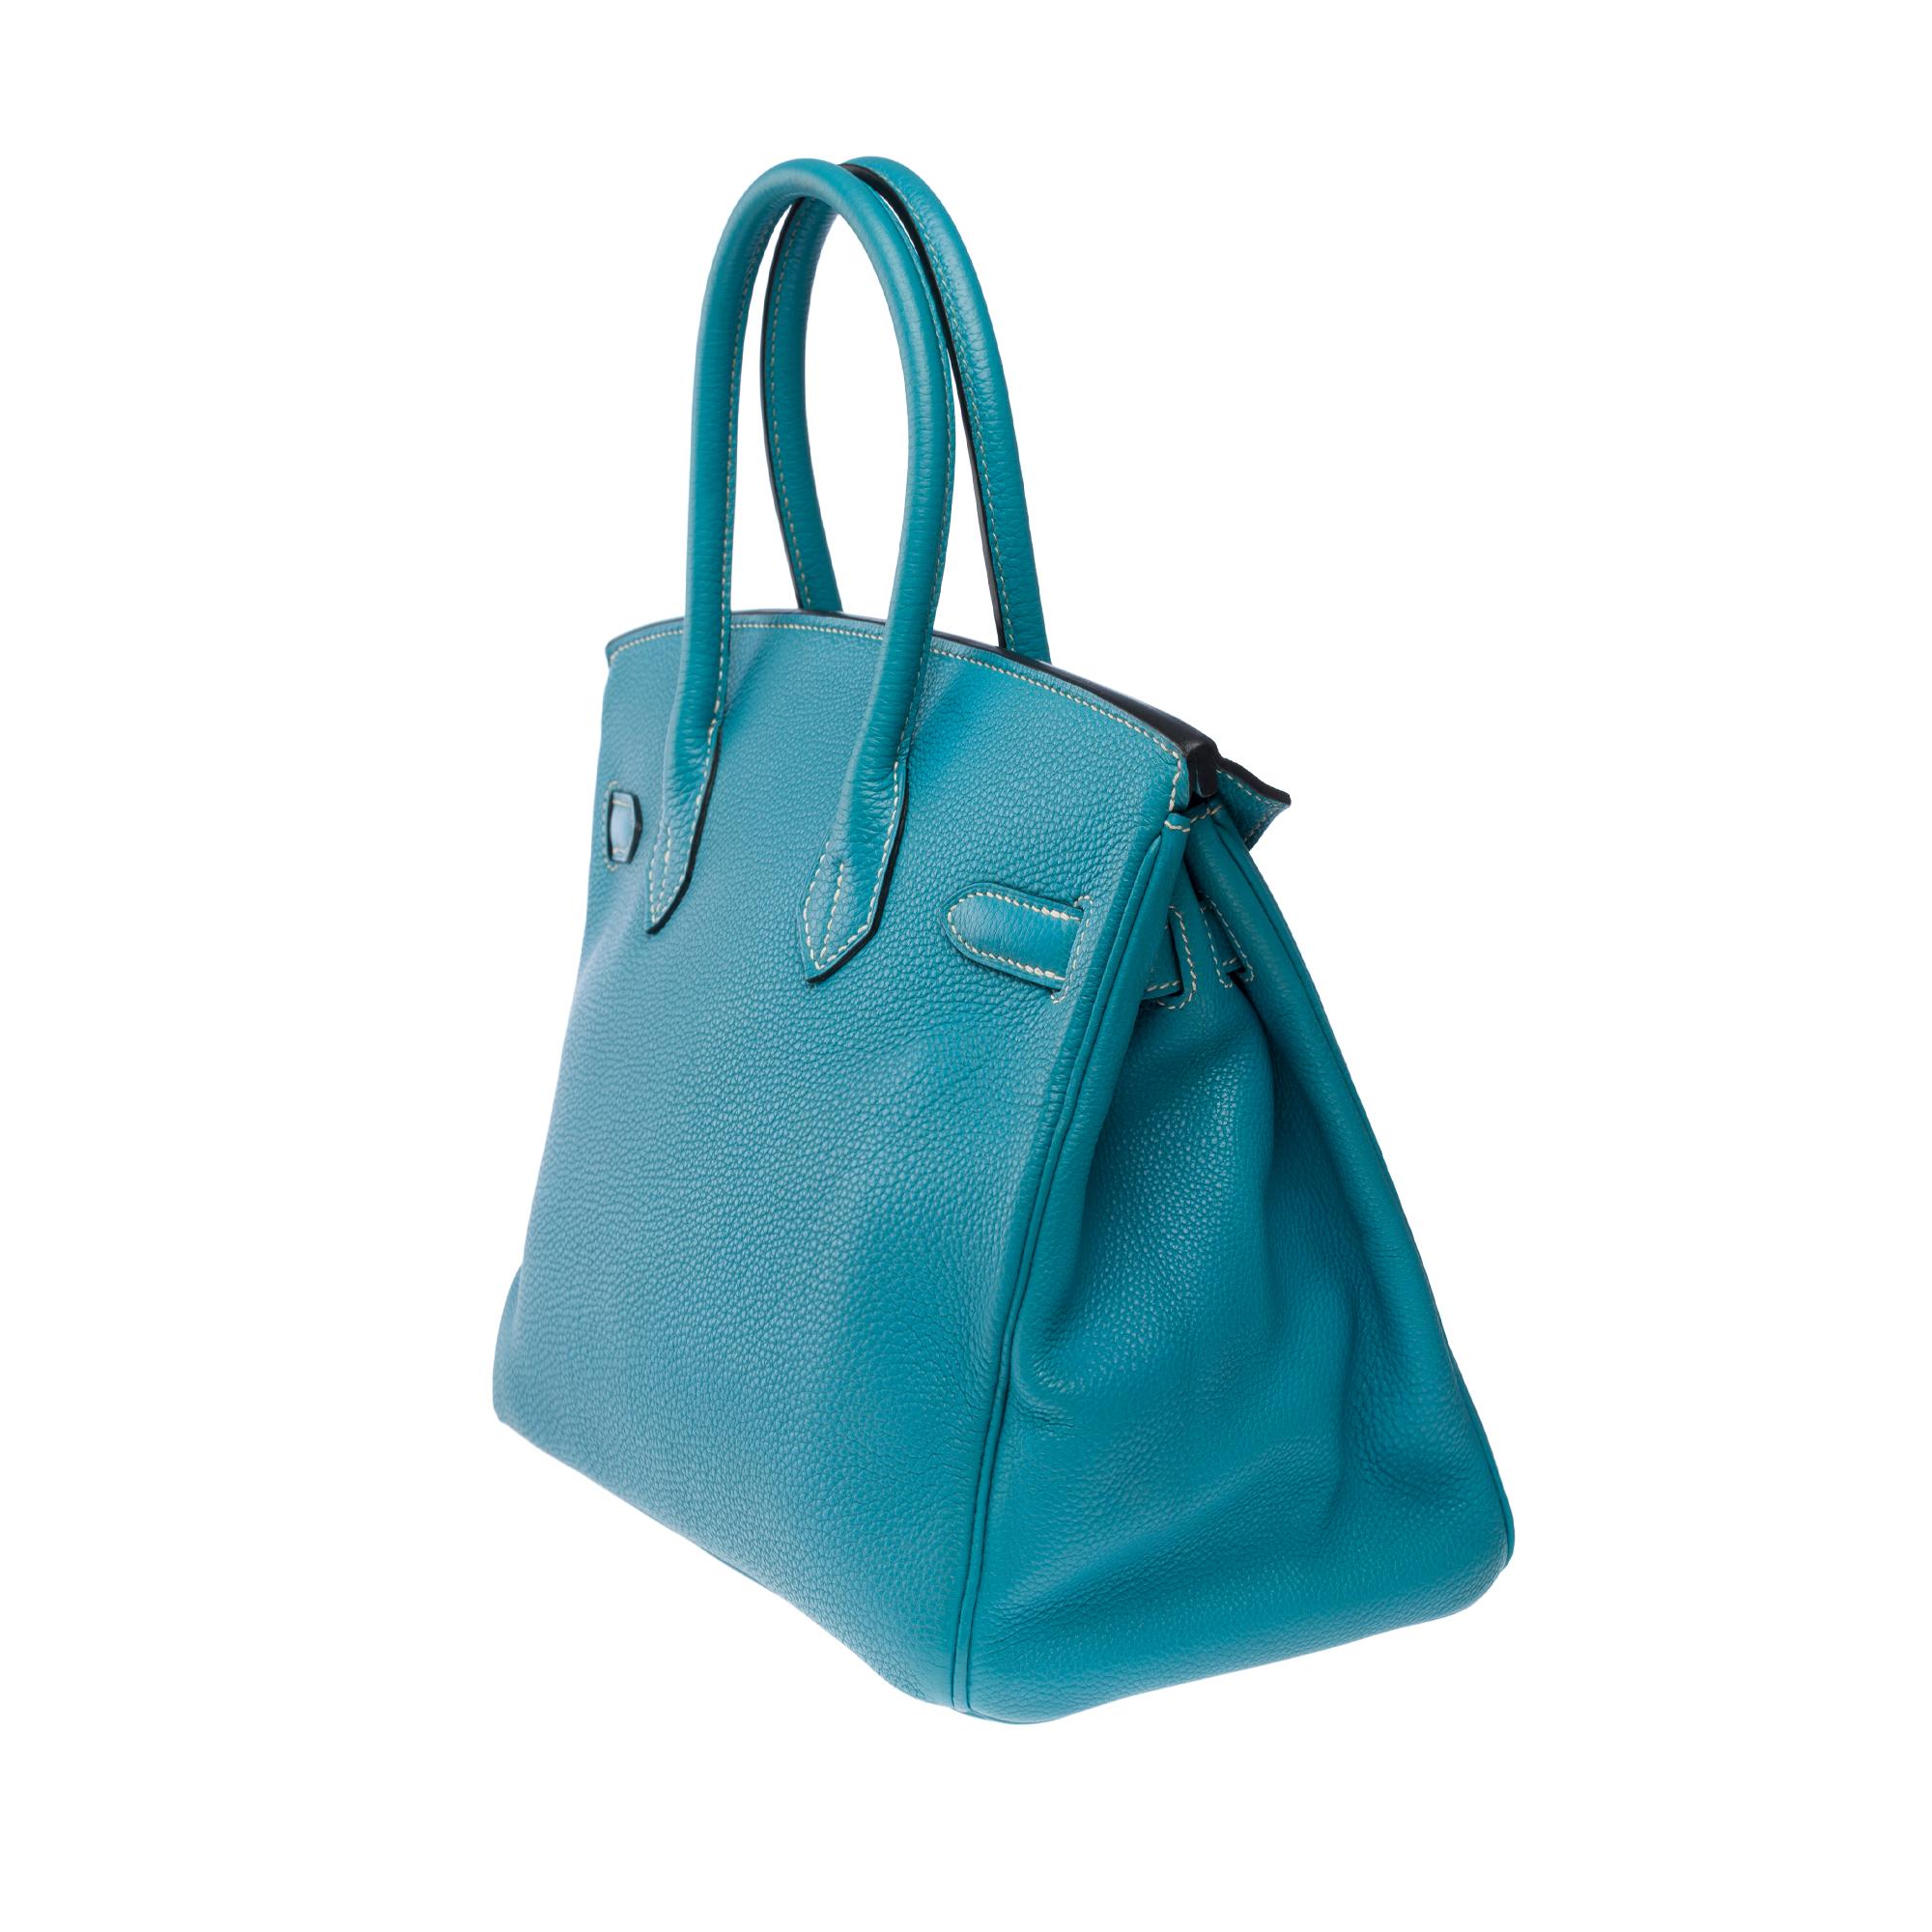 Splendid Hermes Birkin 30 handbag in Blue Jean Togo leather, SHW For Sale 2